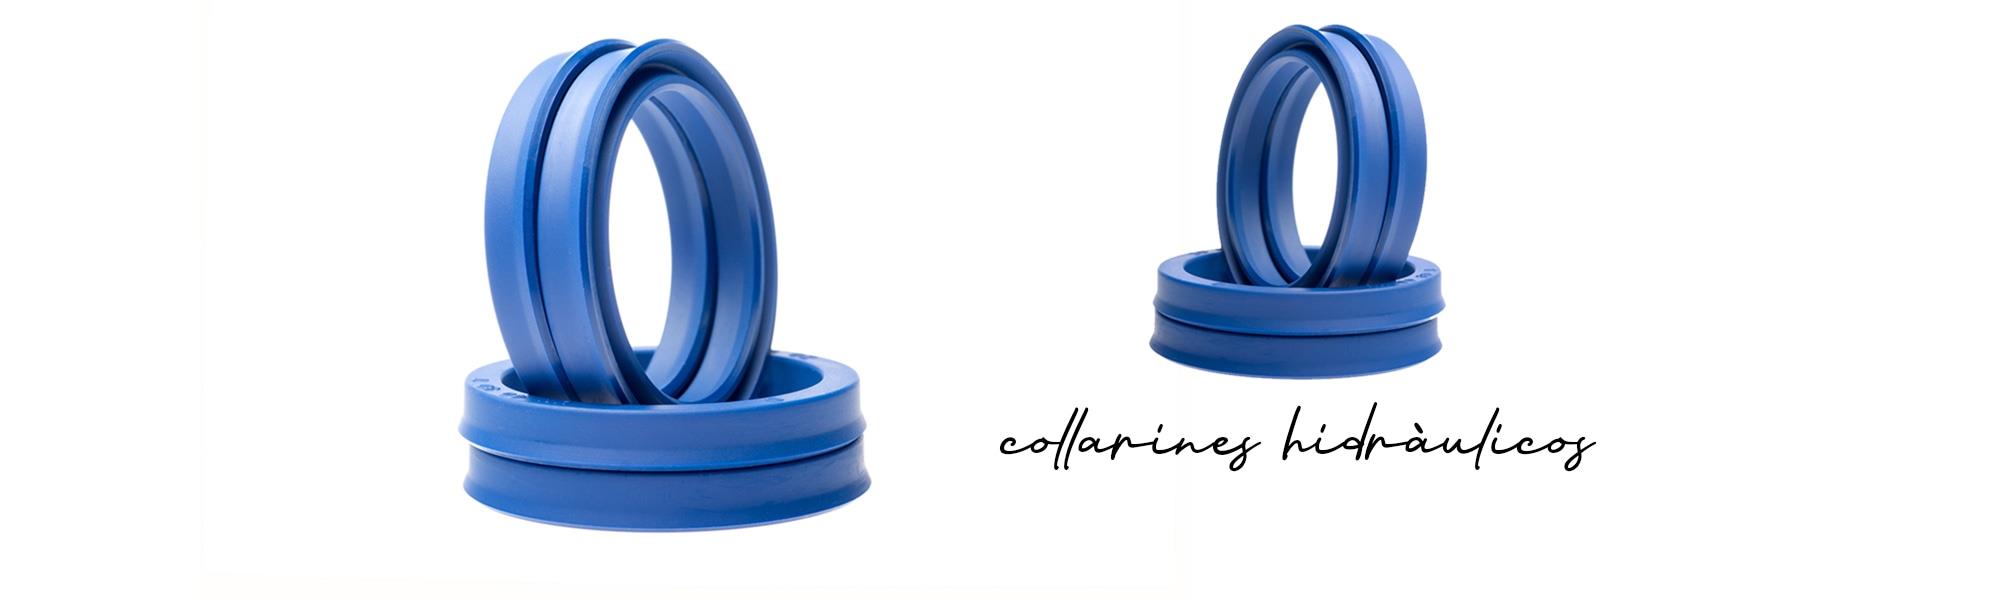 Hydraulic U-Rings and their versatility | News | JIOrings